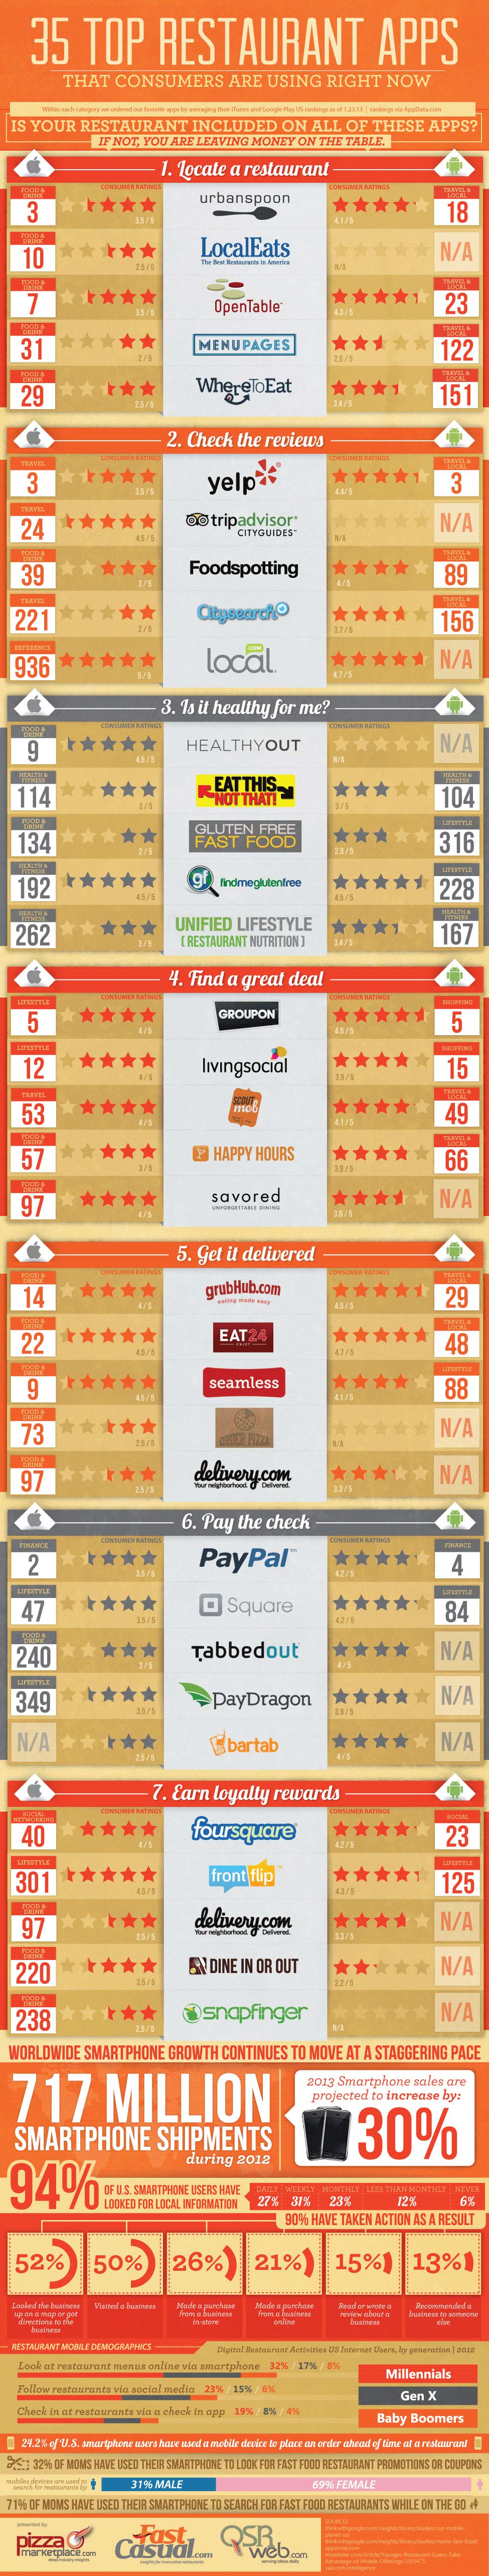 Restaurant Apps US Ranking-Infographic